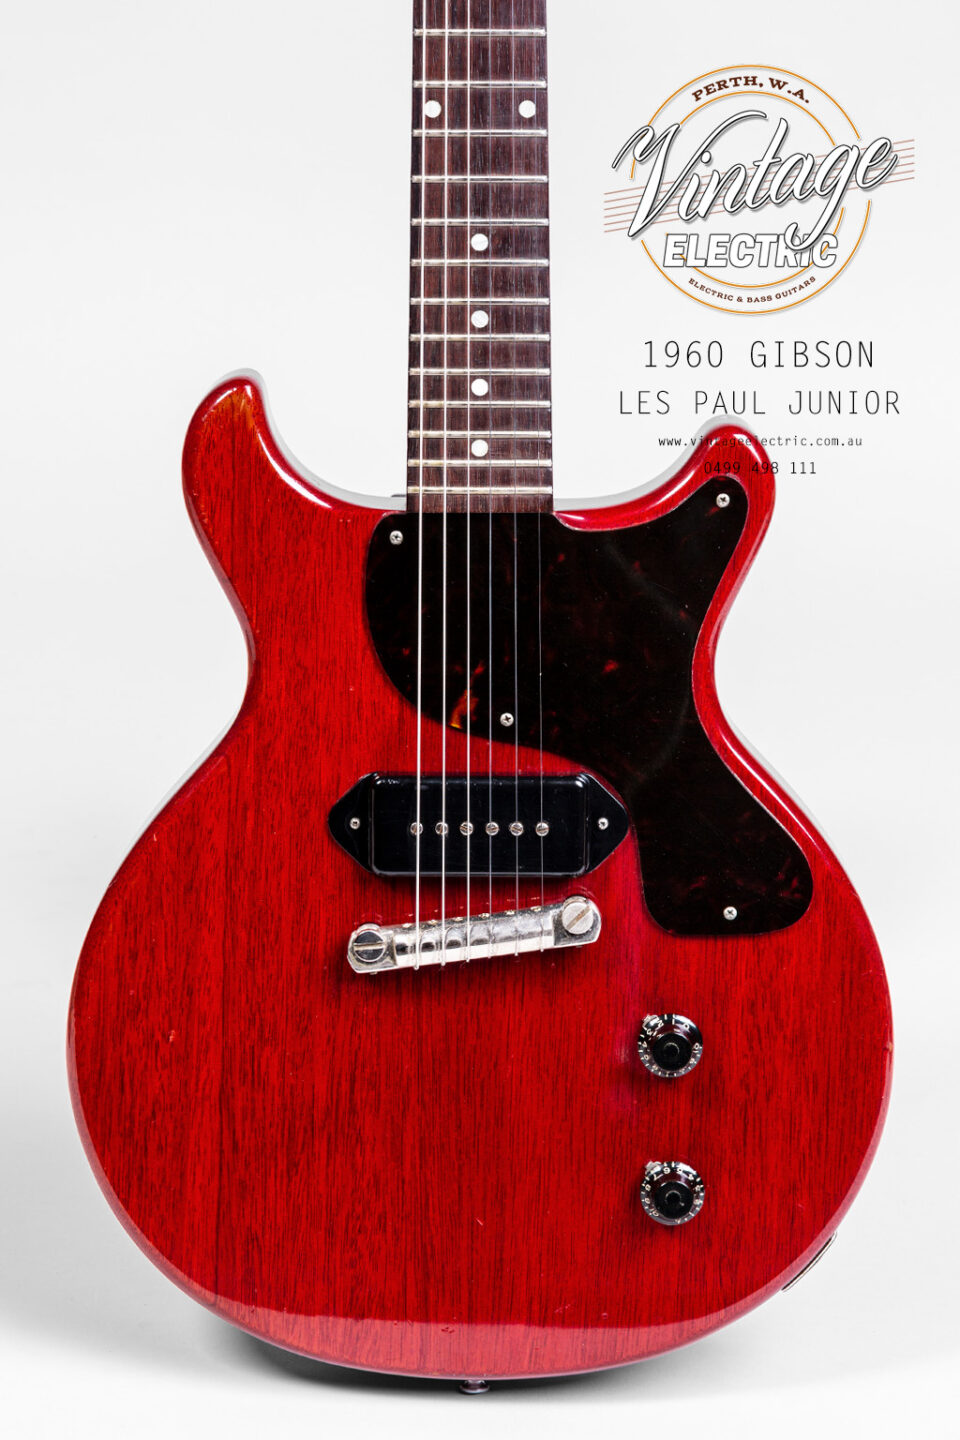 1960 Gibson Les Paul Jr Body